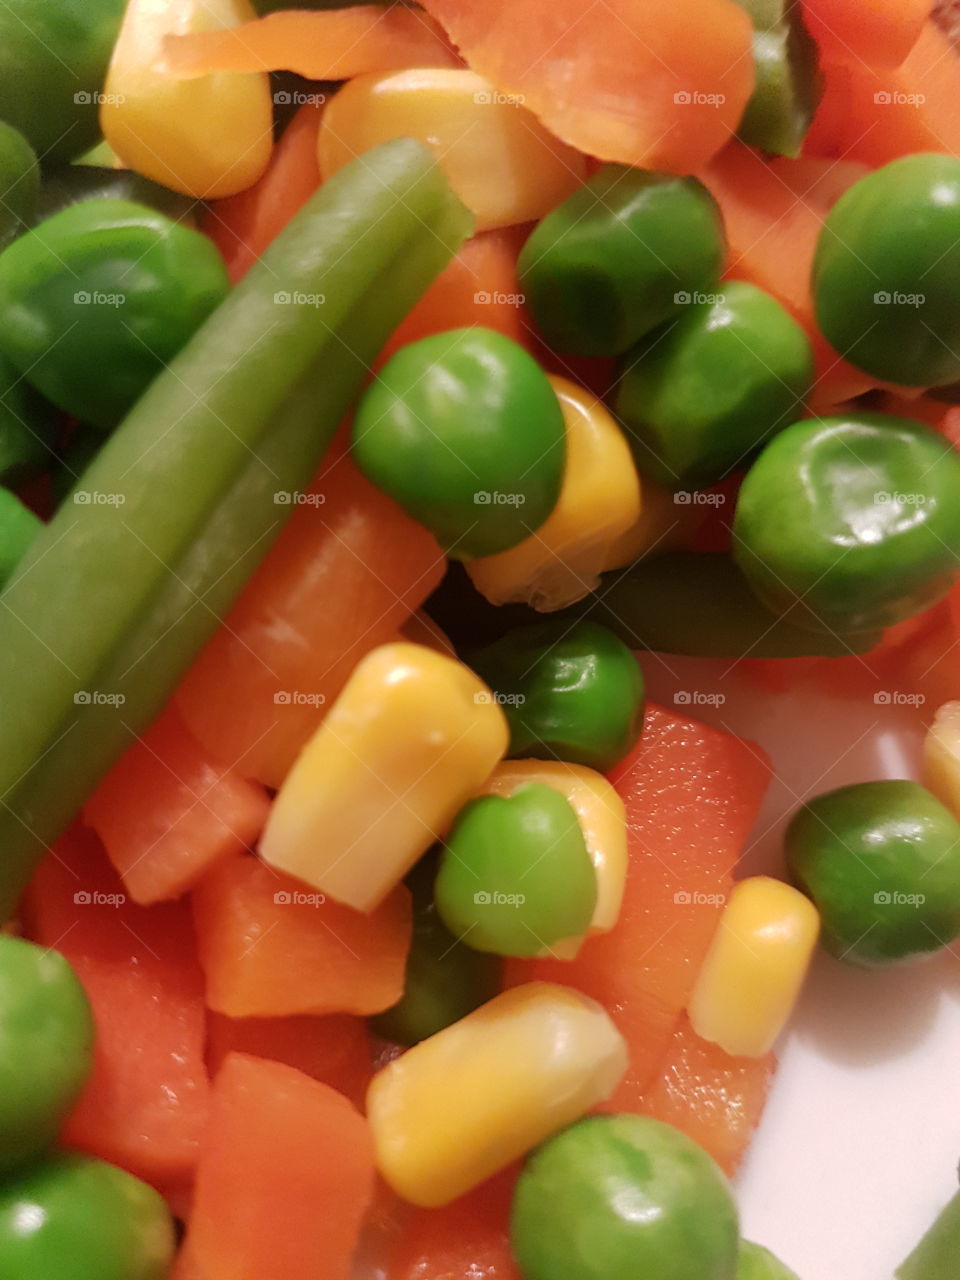 carrots peas sweetcorn vegetables